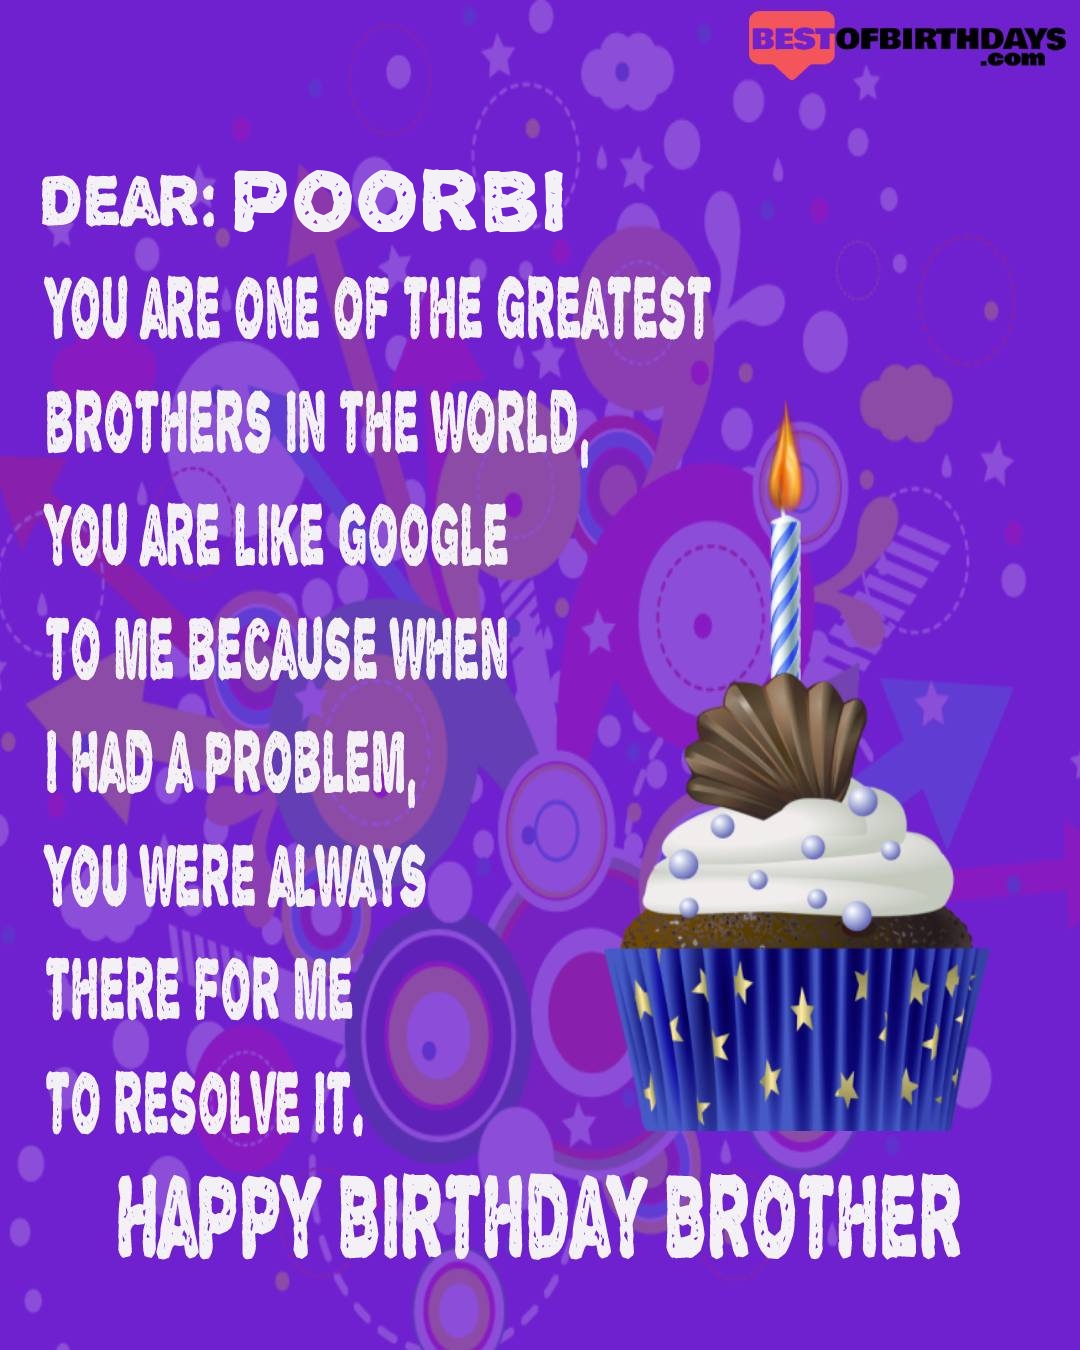 Happy birthday poorbi bhai brother bro